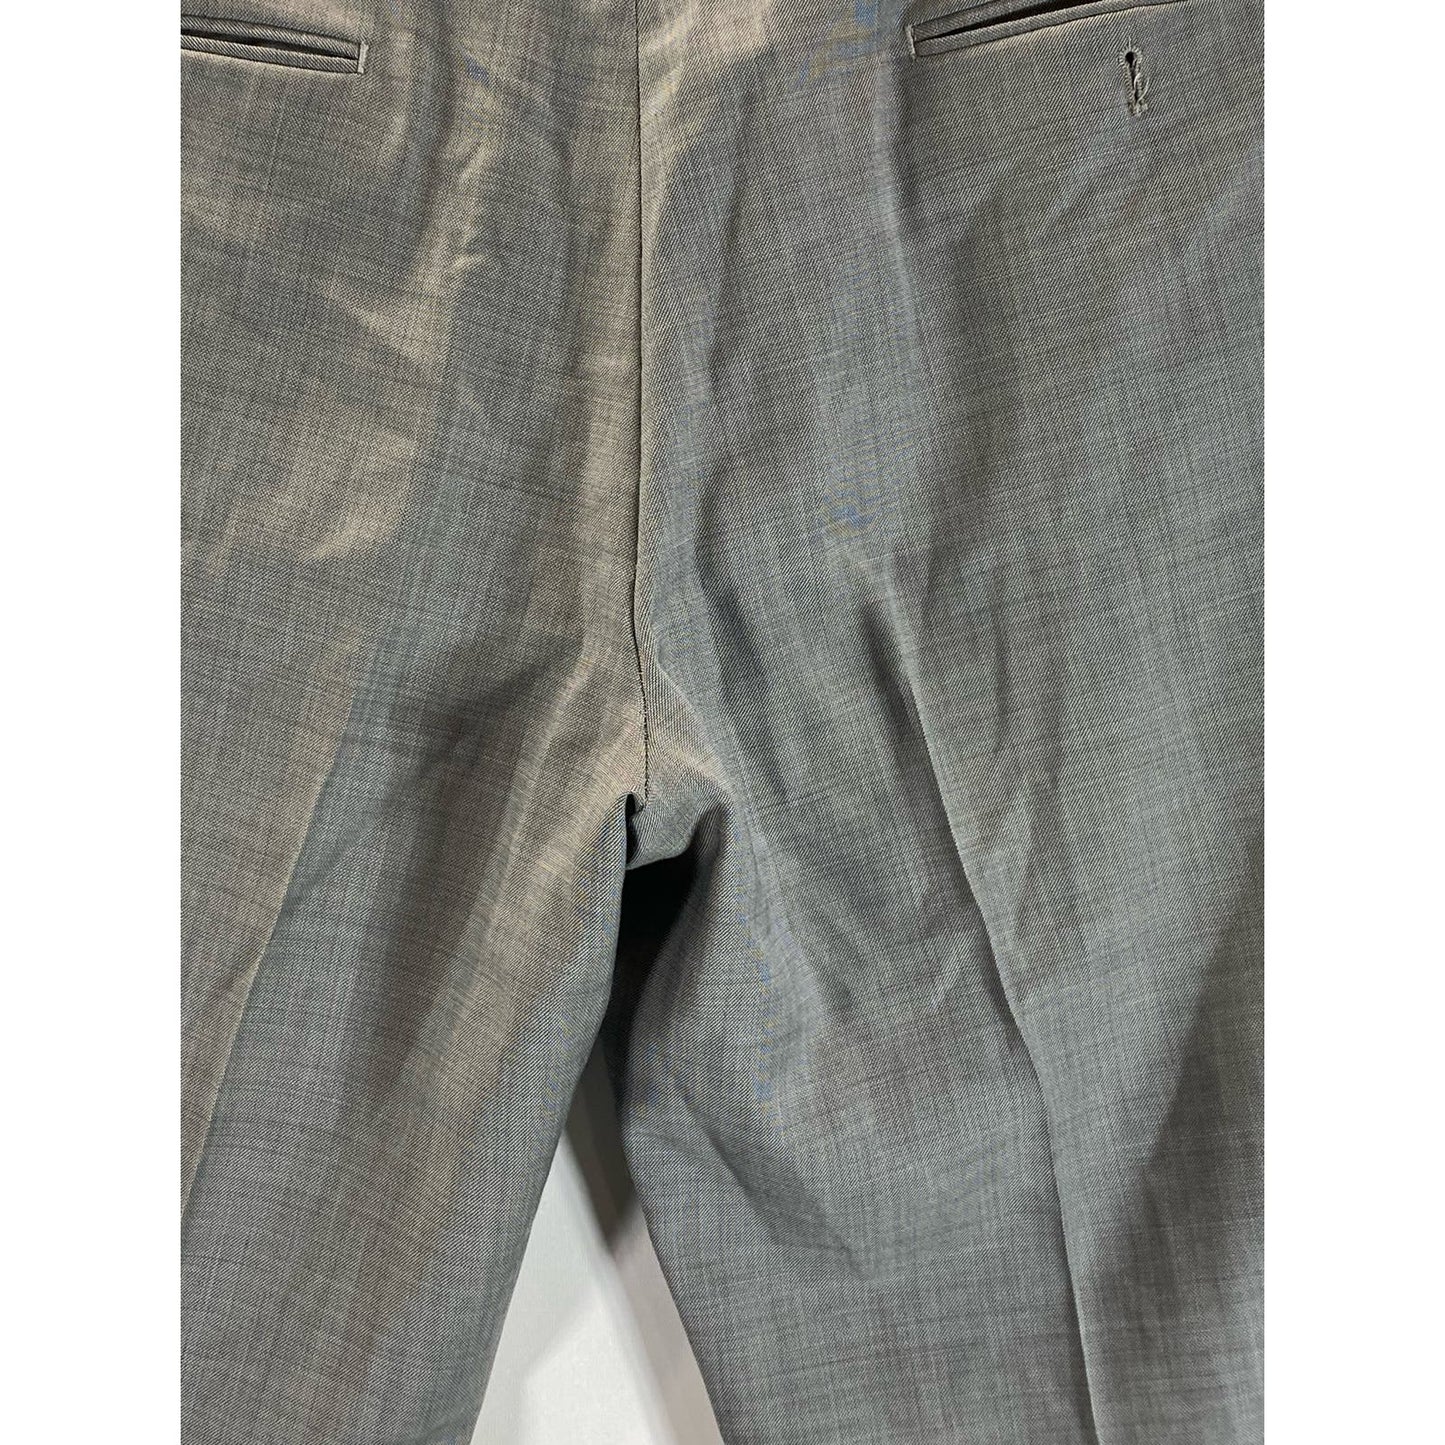 TOMMY HILFIGER Men's Light Grey Sharkskin Modern-Fit Flat Front Pants SZ 36X32